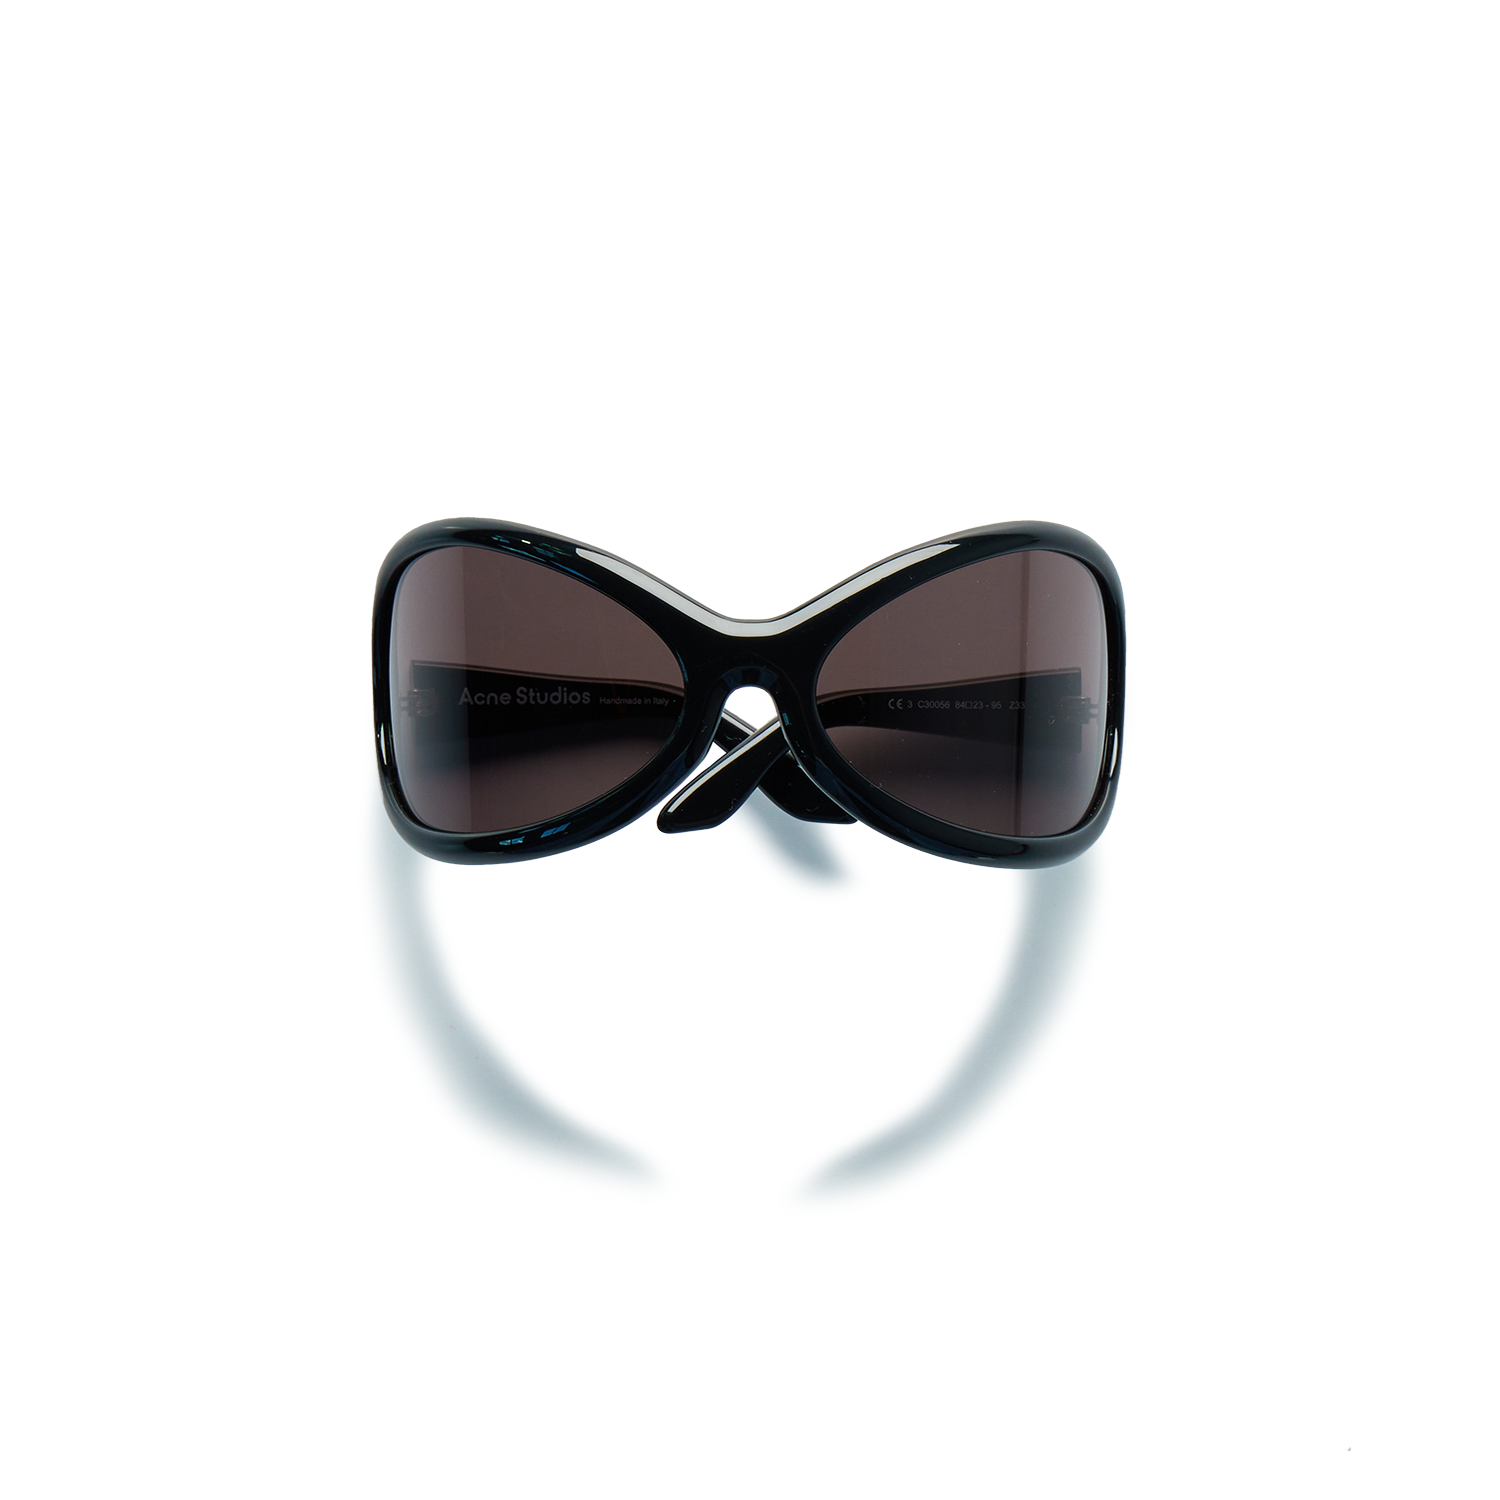 ACNE STUDIOS - Frame Sunglasses product image